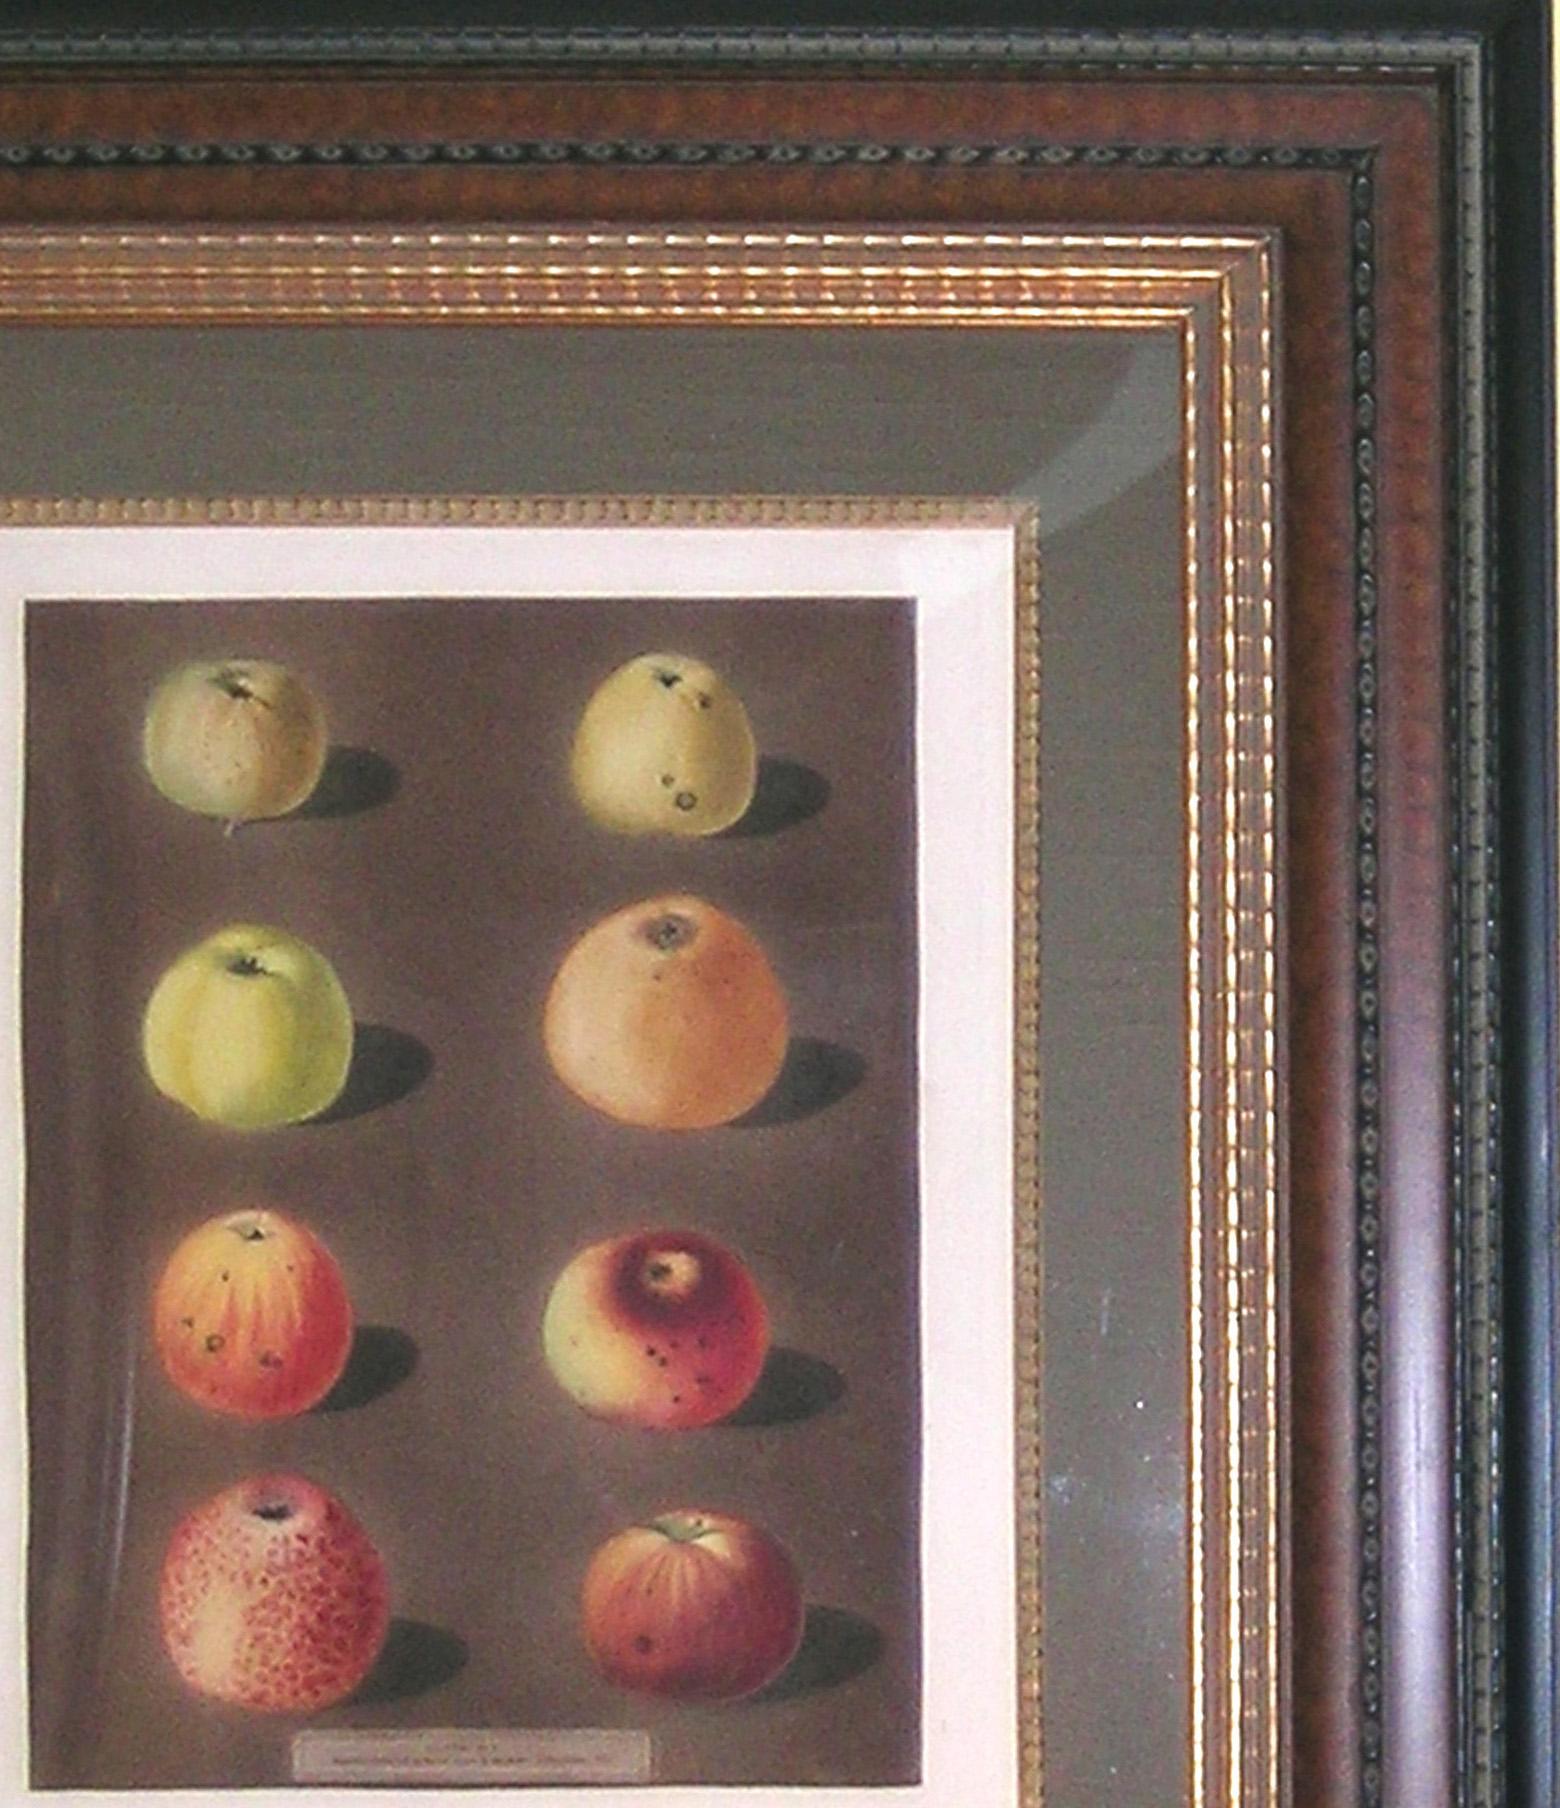 Plate 91.  Apples. - Academic Print by george brookshaw